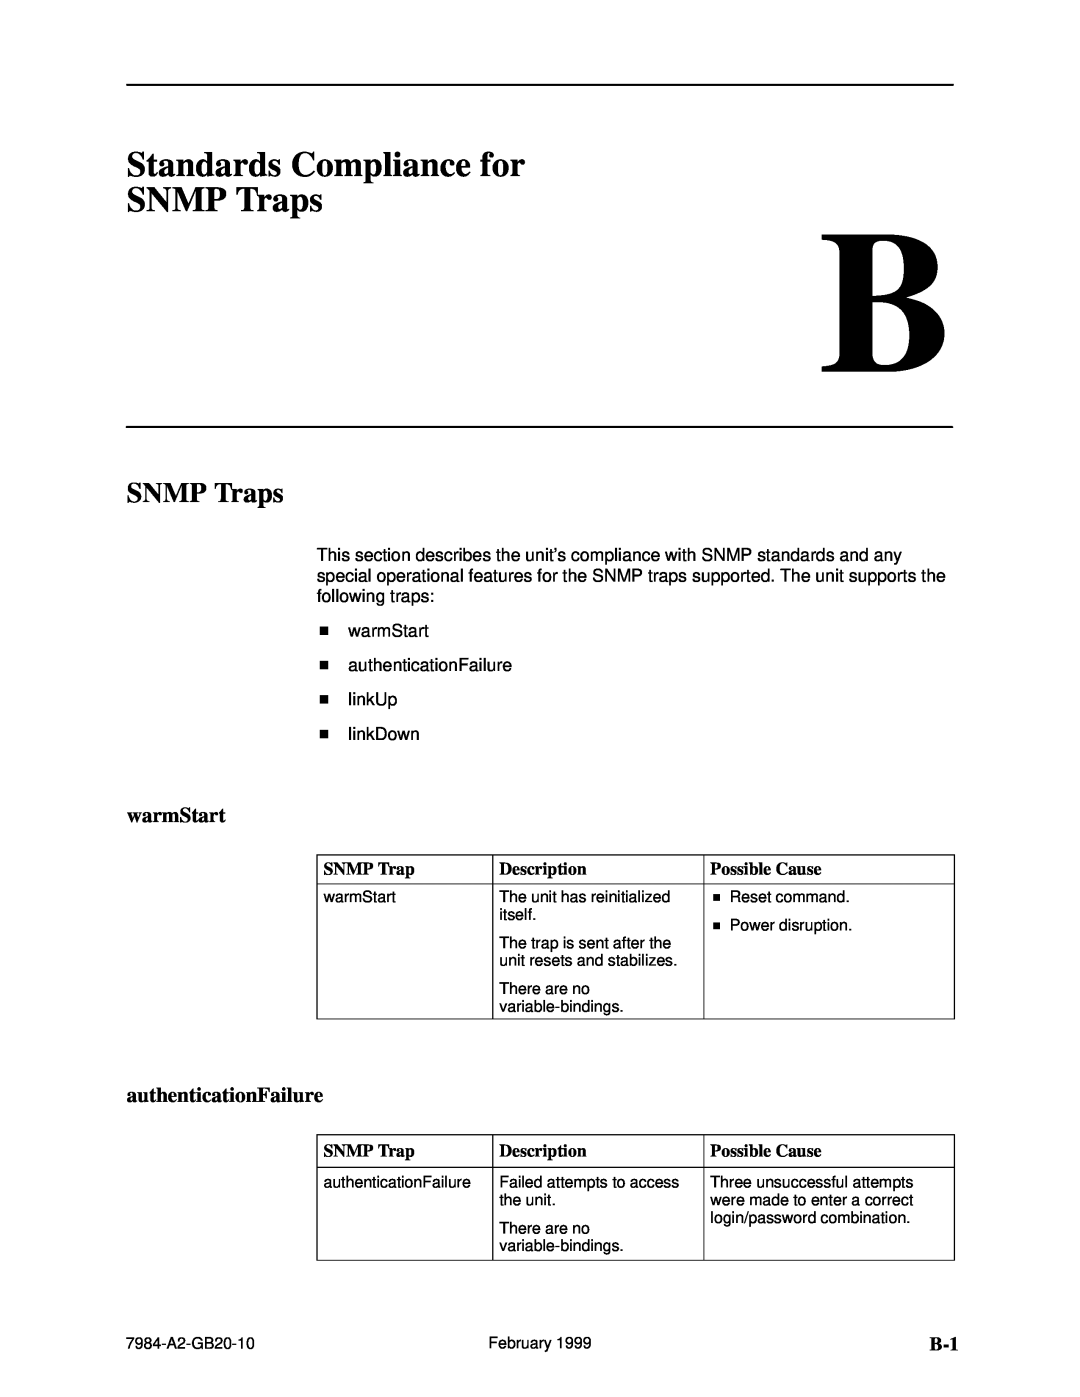 Paradyne Hotwire 7984 Standards Compliance for SNMP Traps, warmStart, authenticationFailure, Description, Possible Cause 